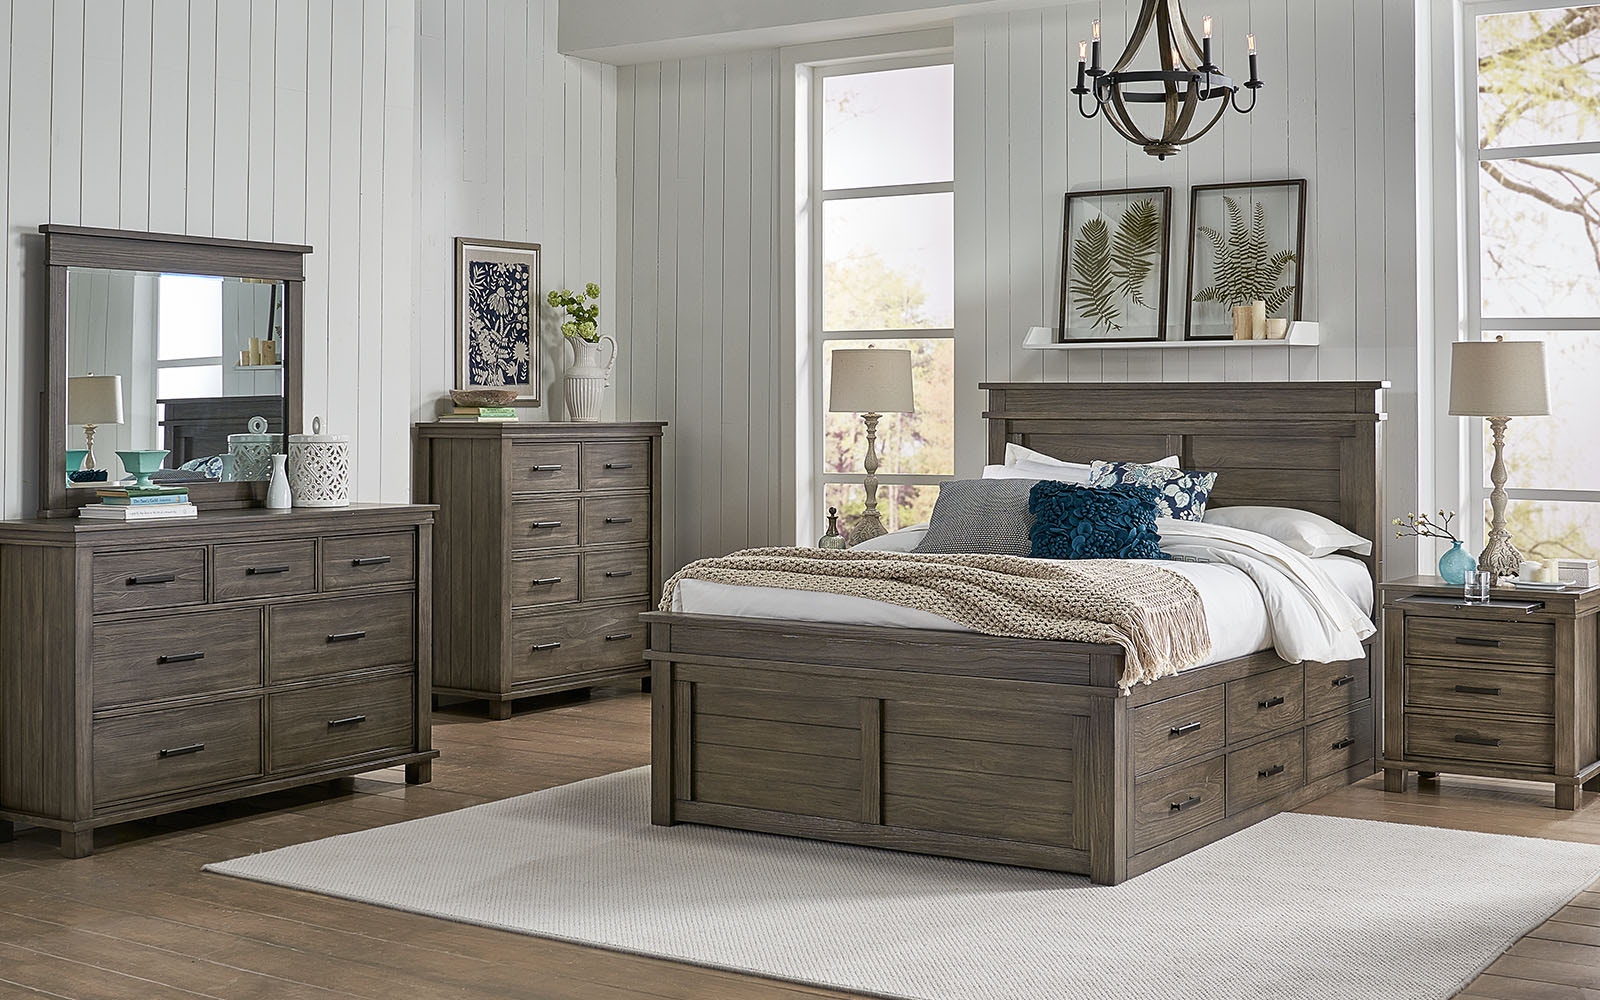 A America Bedroom LINGERIE CHEST GLPGR5700 - Furniture Market